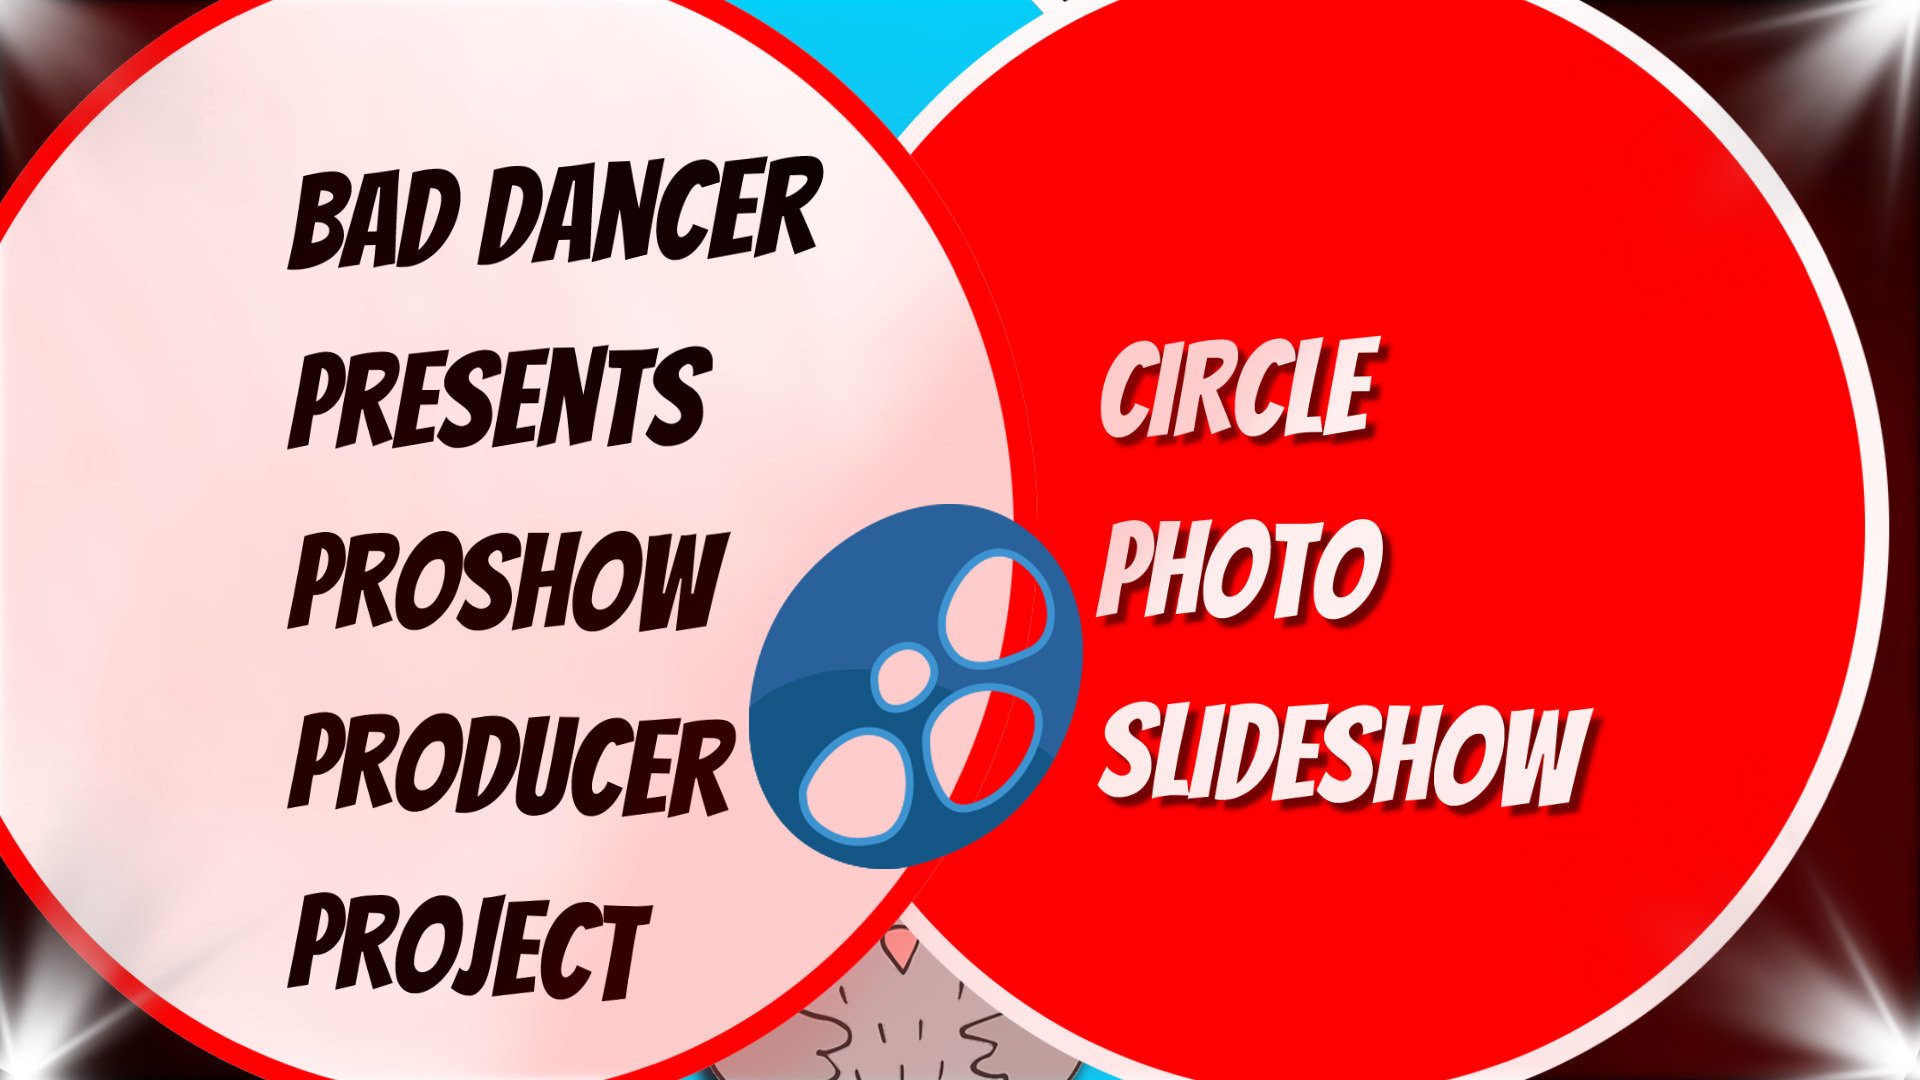 Free Proshow Producer project Photo Circle Photo Slideshow ID 29052022.mp4